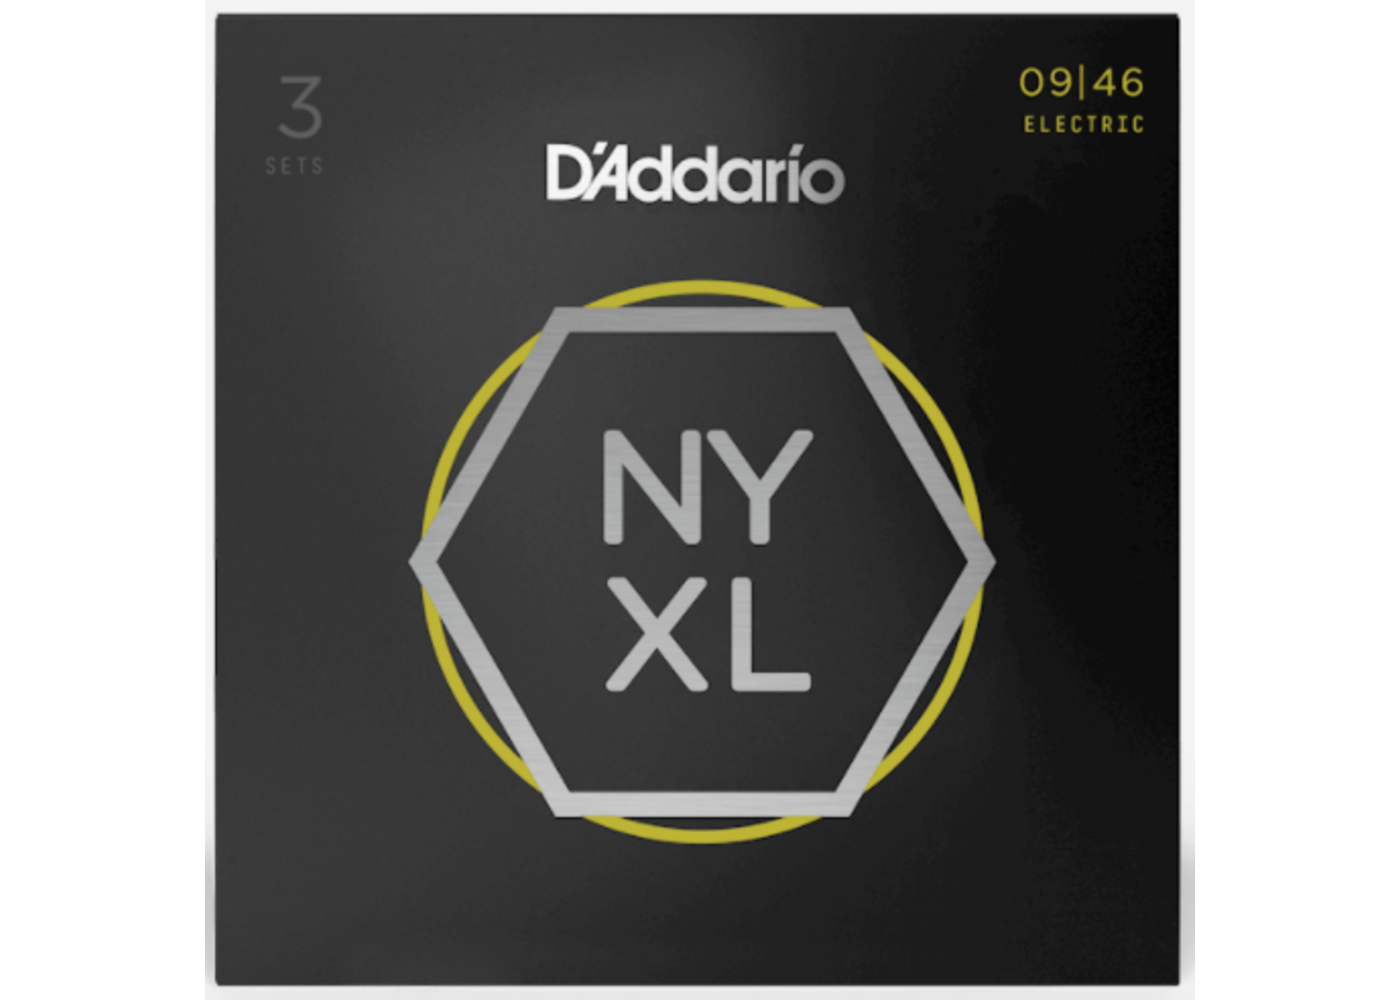 D'Addario D'Addario NYXL0946-P Nickel Wound Electric Guitar Strings Super Light Top / Regular Bottom 9-46 3 Pack